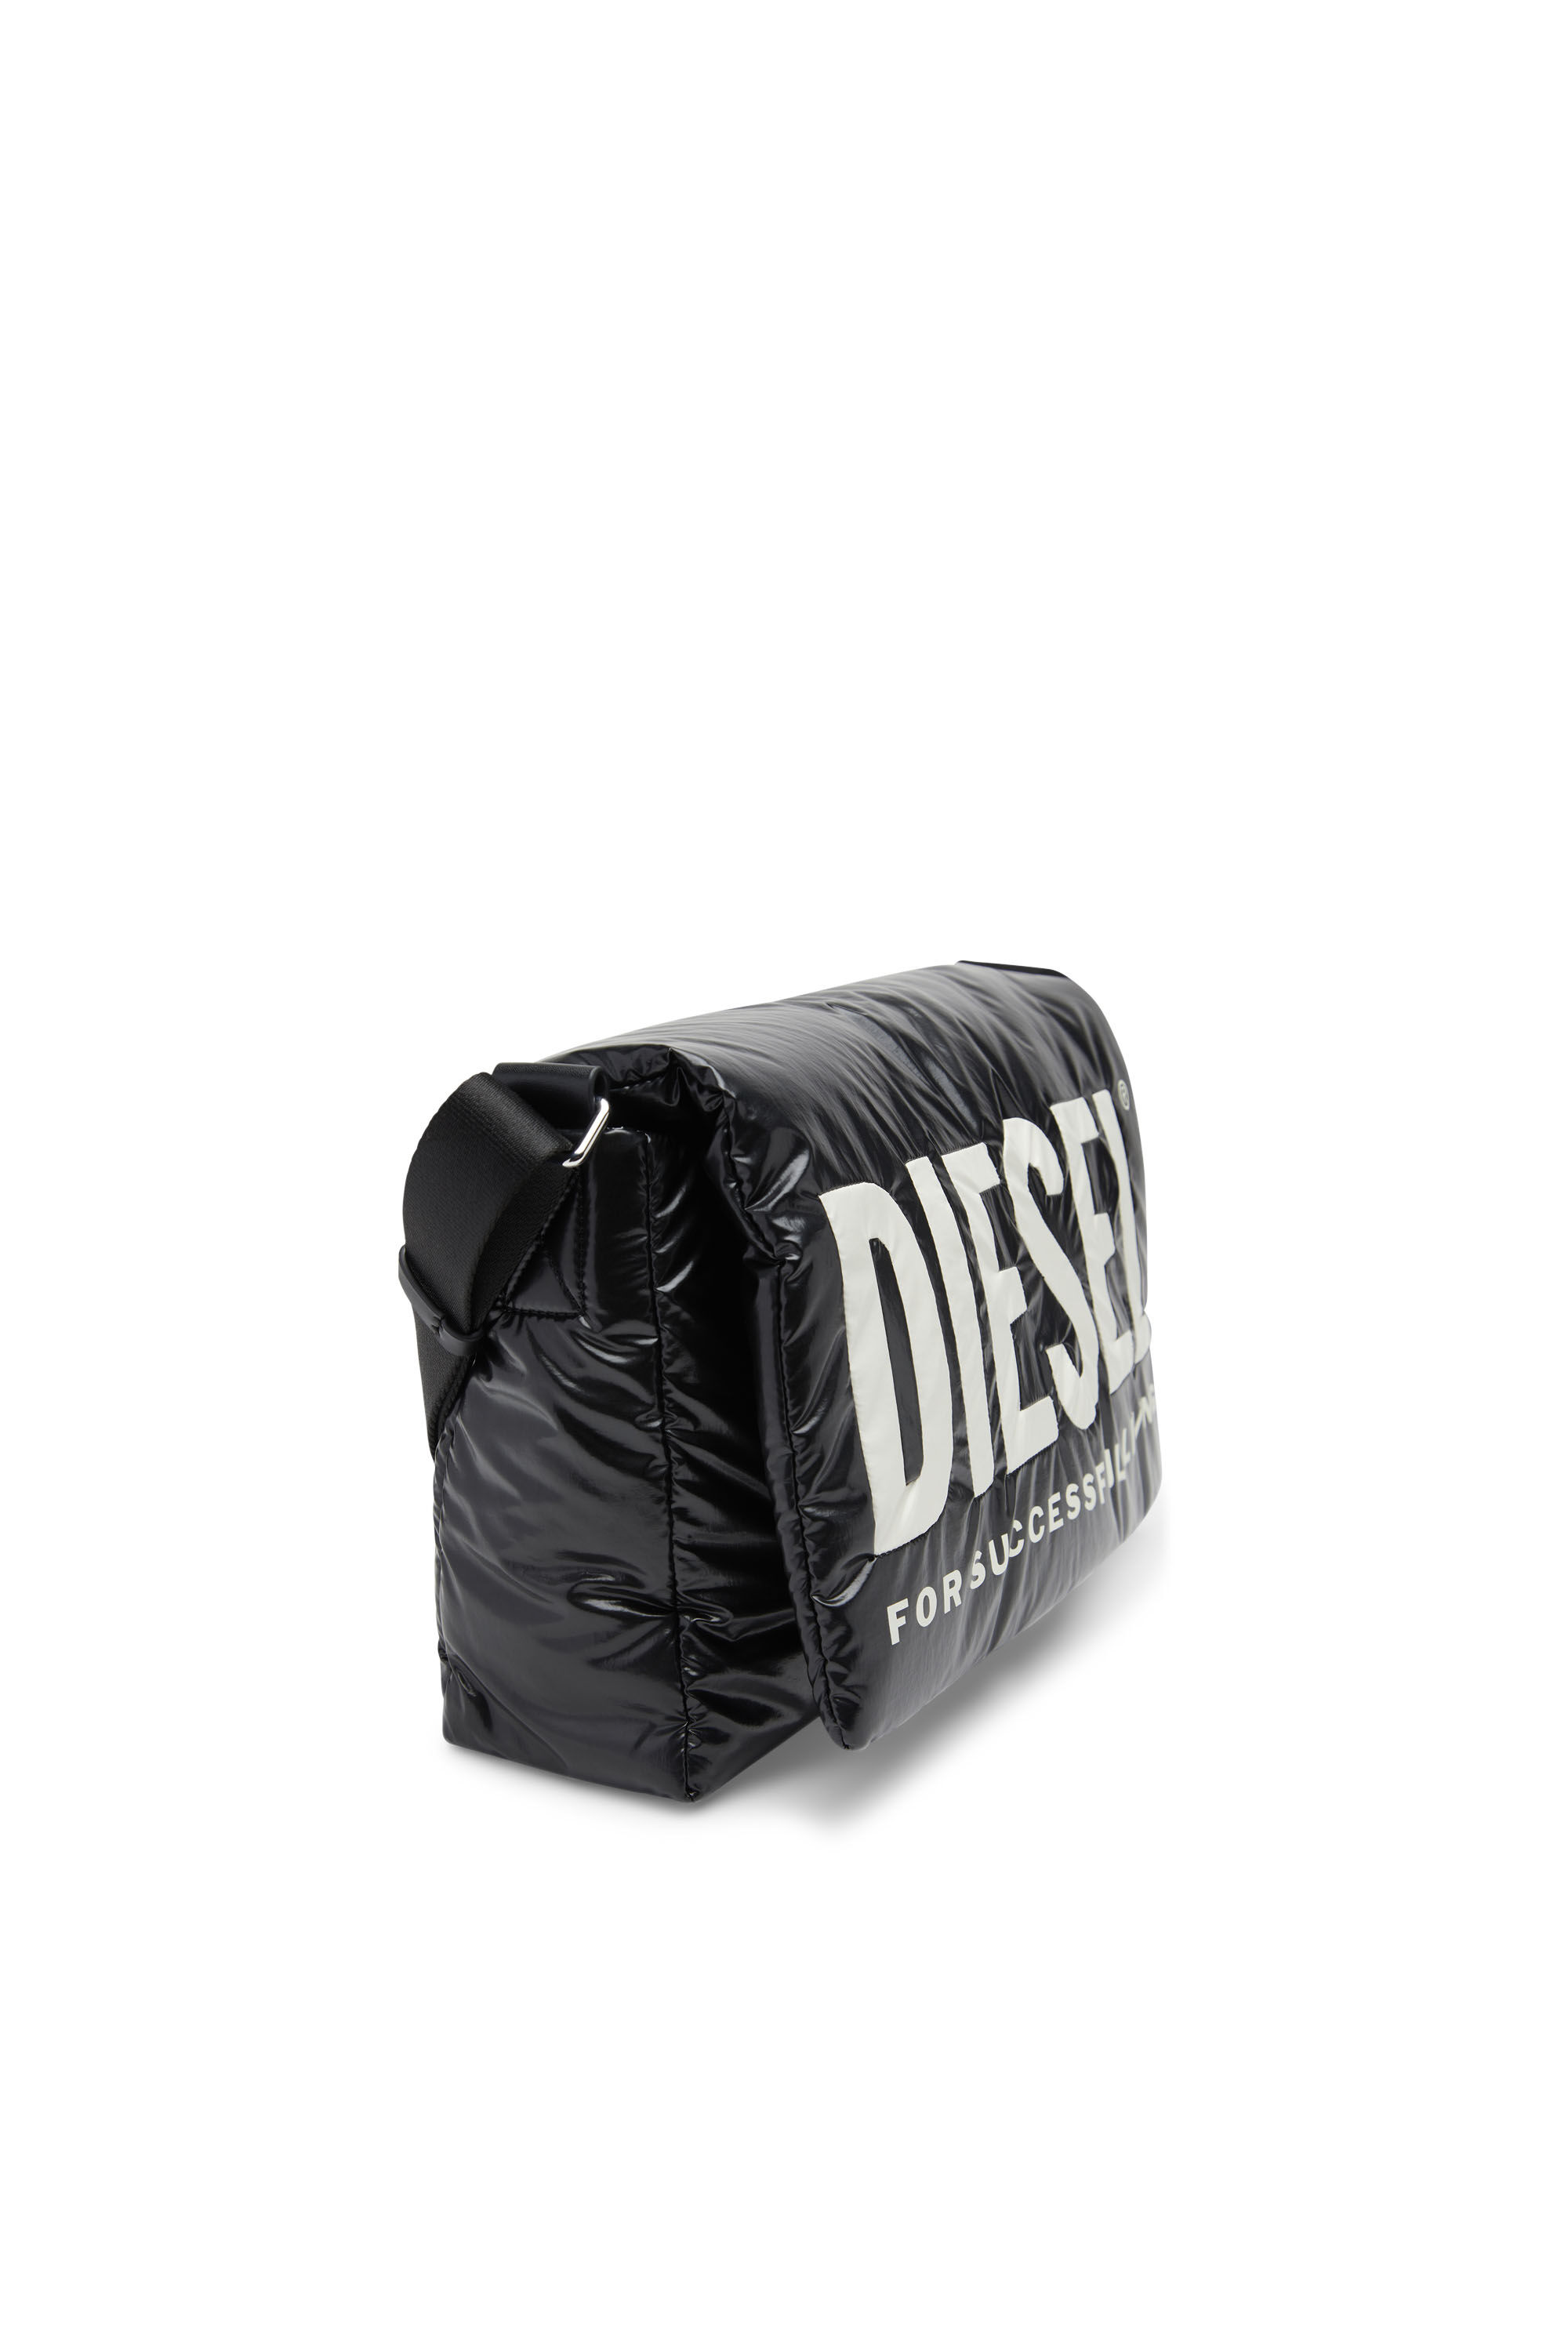 Diesel - PUFF DSL MESSENGER M X,  - Image 5